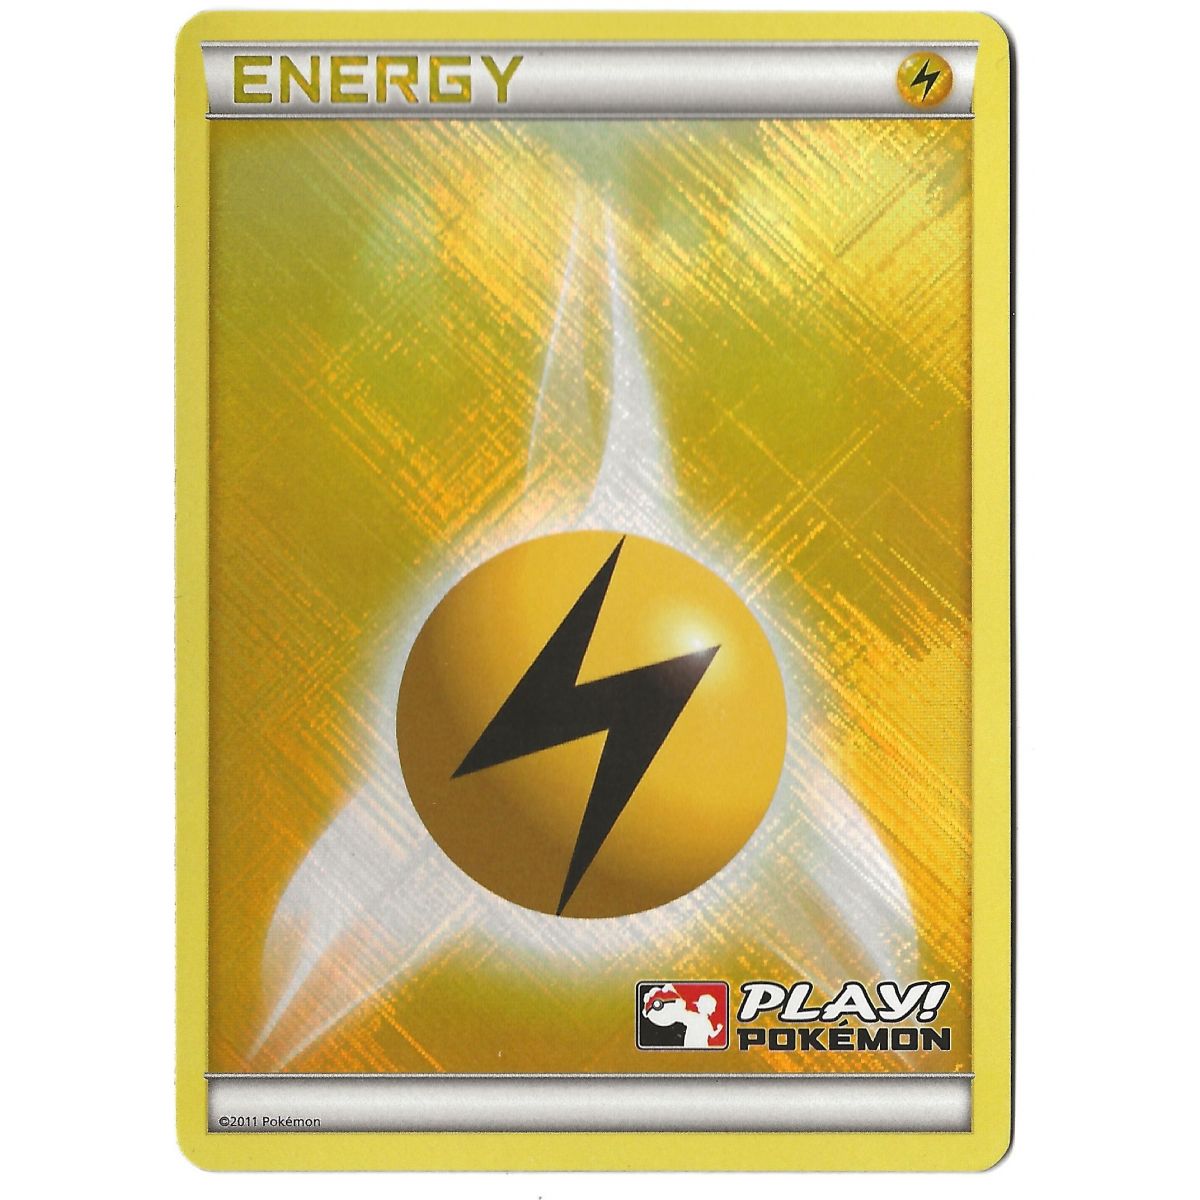 Energy Electrik Play! Pokémon - Reverse Rare - 2011